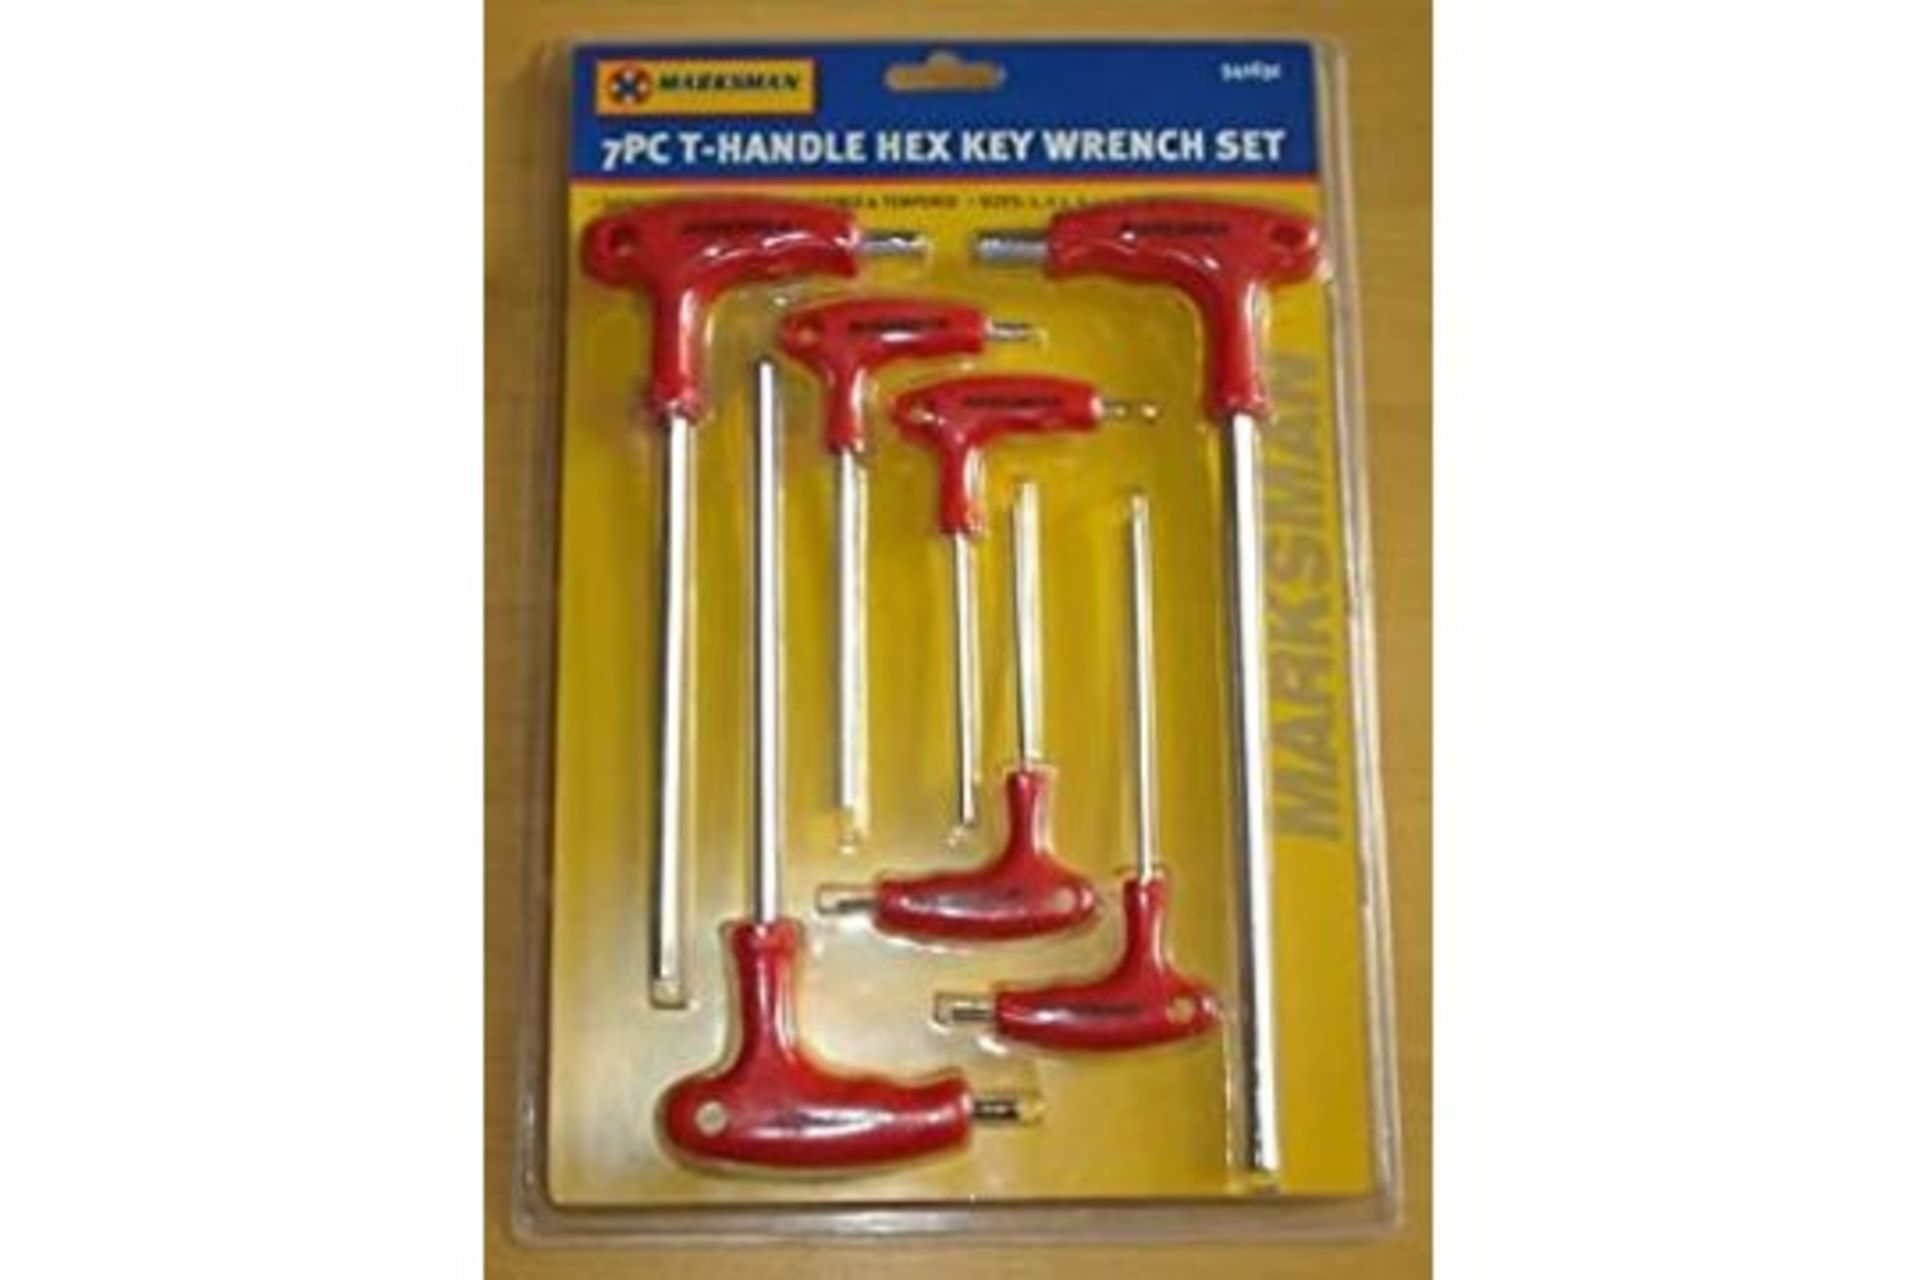 Marksman 7PC T-Handle Hex Key Wrench Set